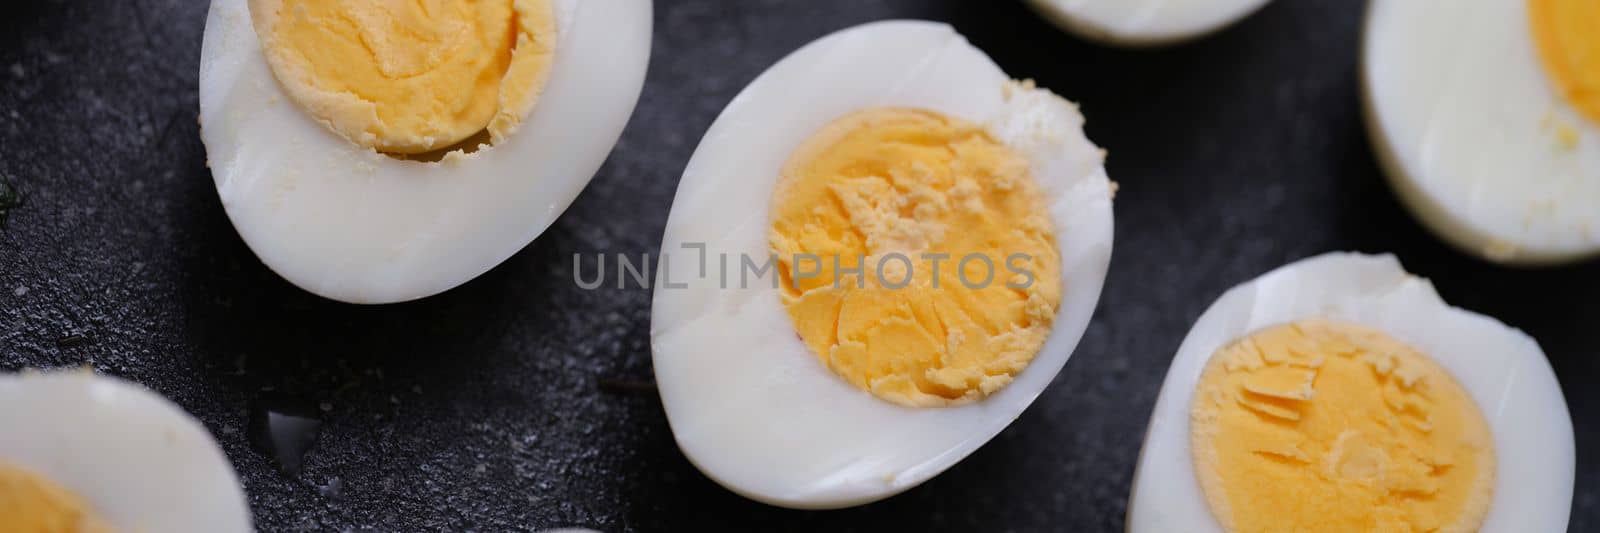 Sliced hard boiled eggs on dark background by kuprevich